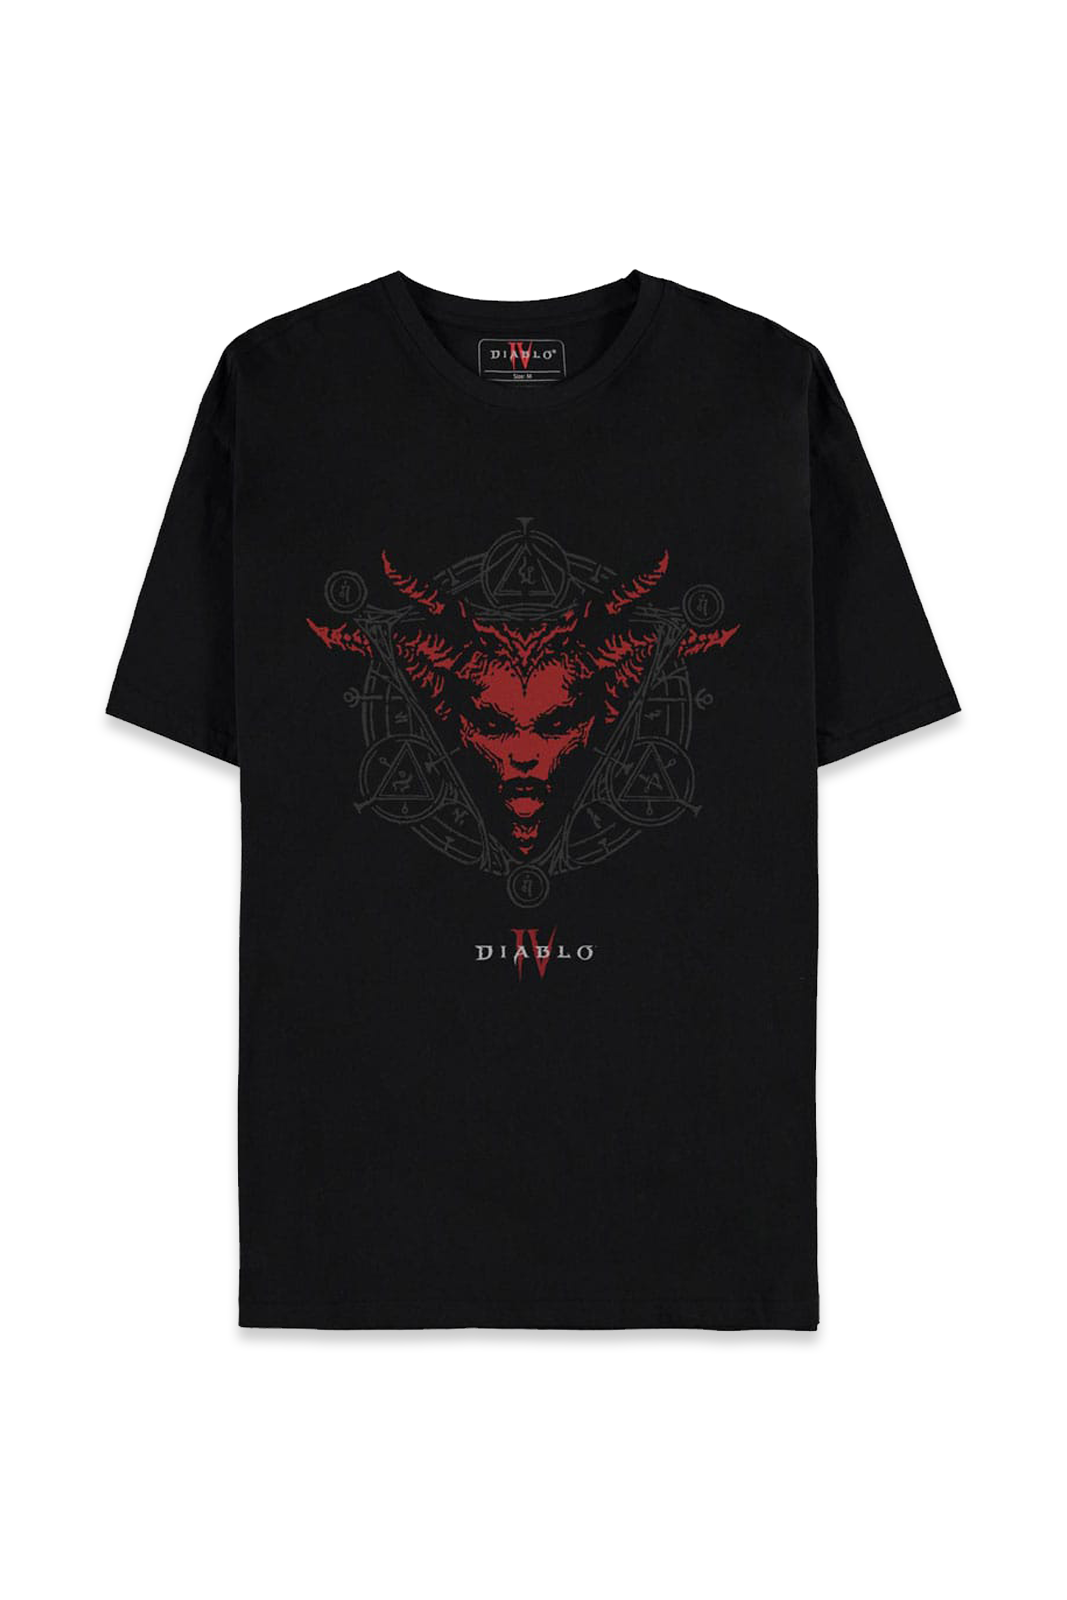 T-Shirt - Diablo IV -  Lilith